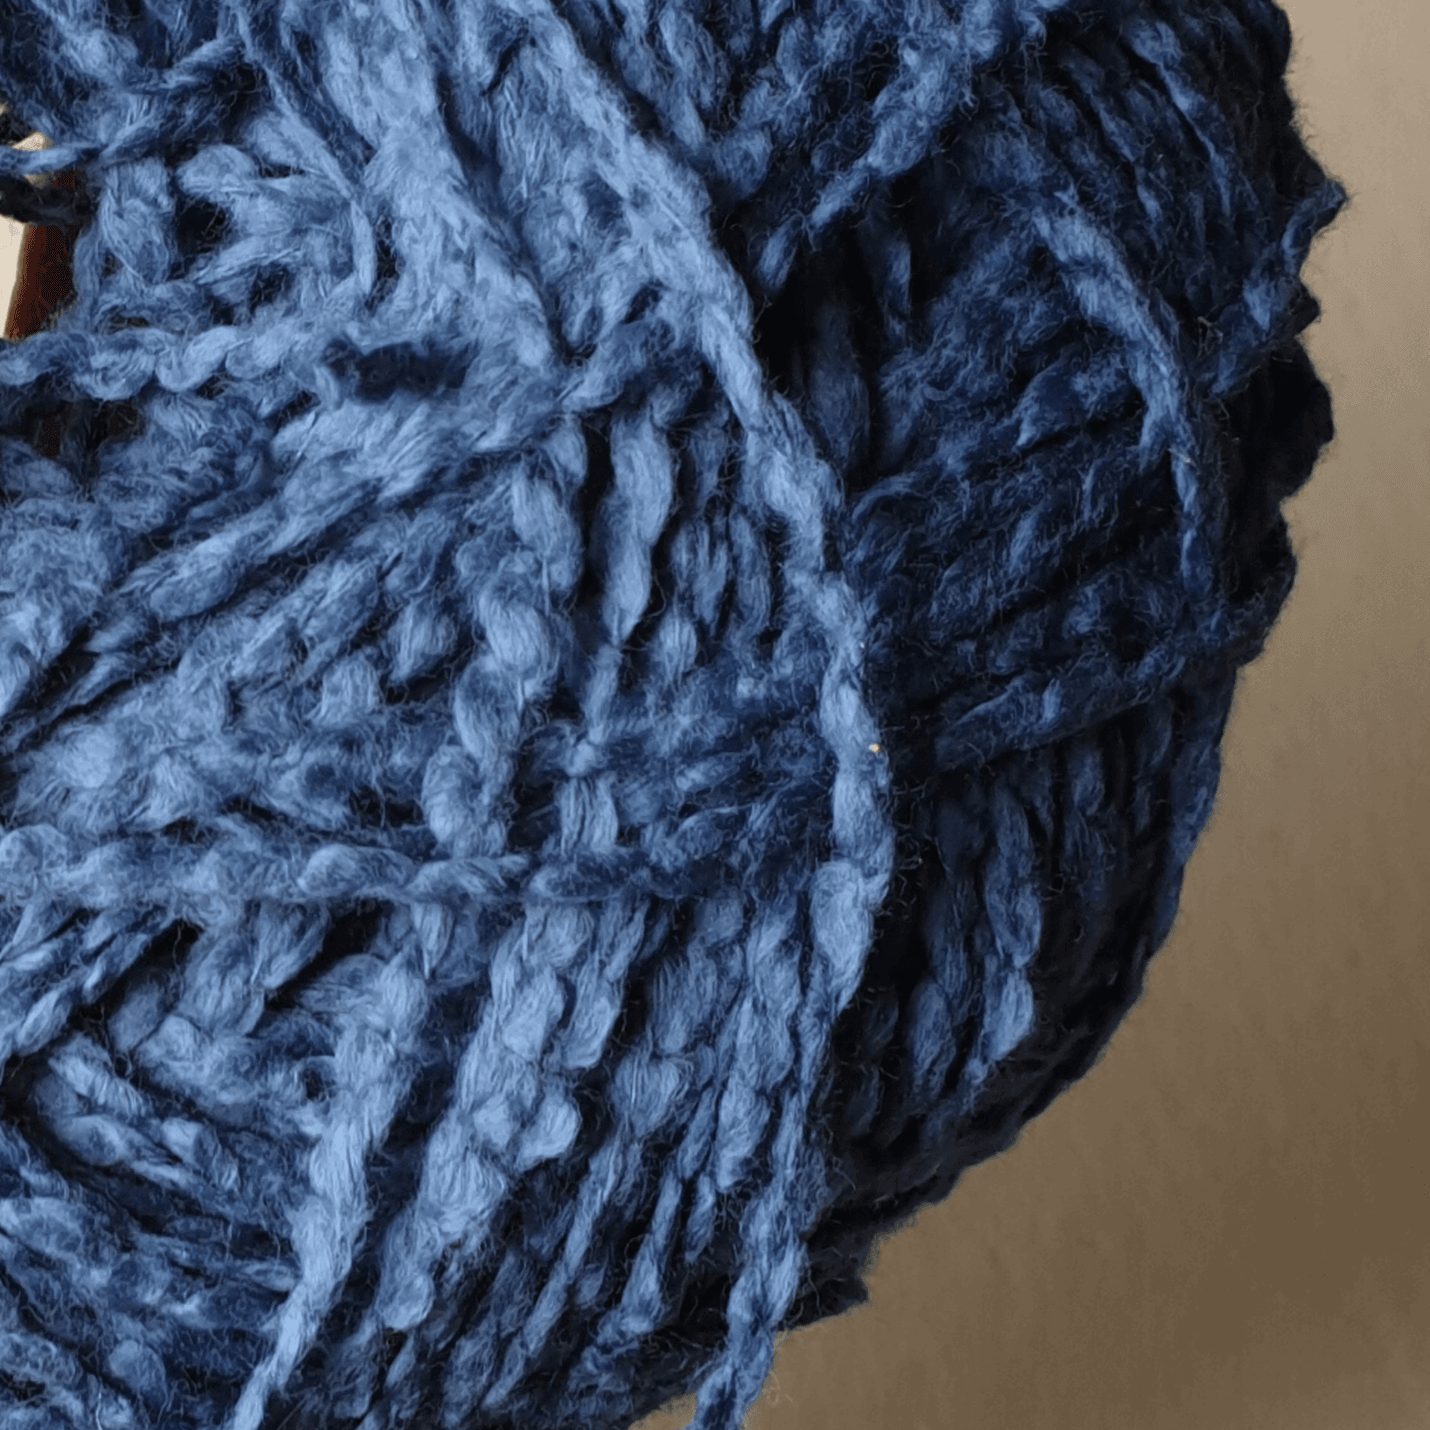 Cotton Candy Wolle - Jeans Blau - Indigo - 100gr - Effektwolle -CotCandyJeansblau - Gokrea.com